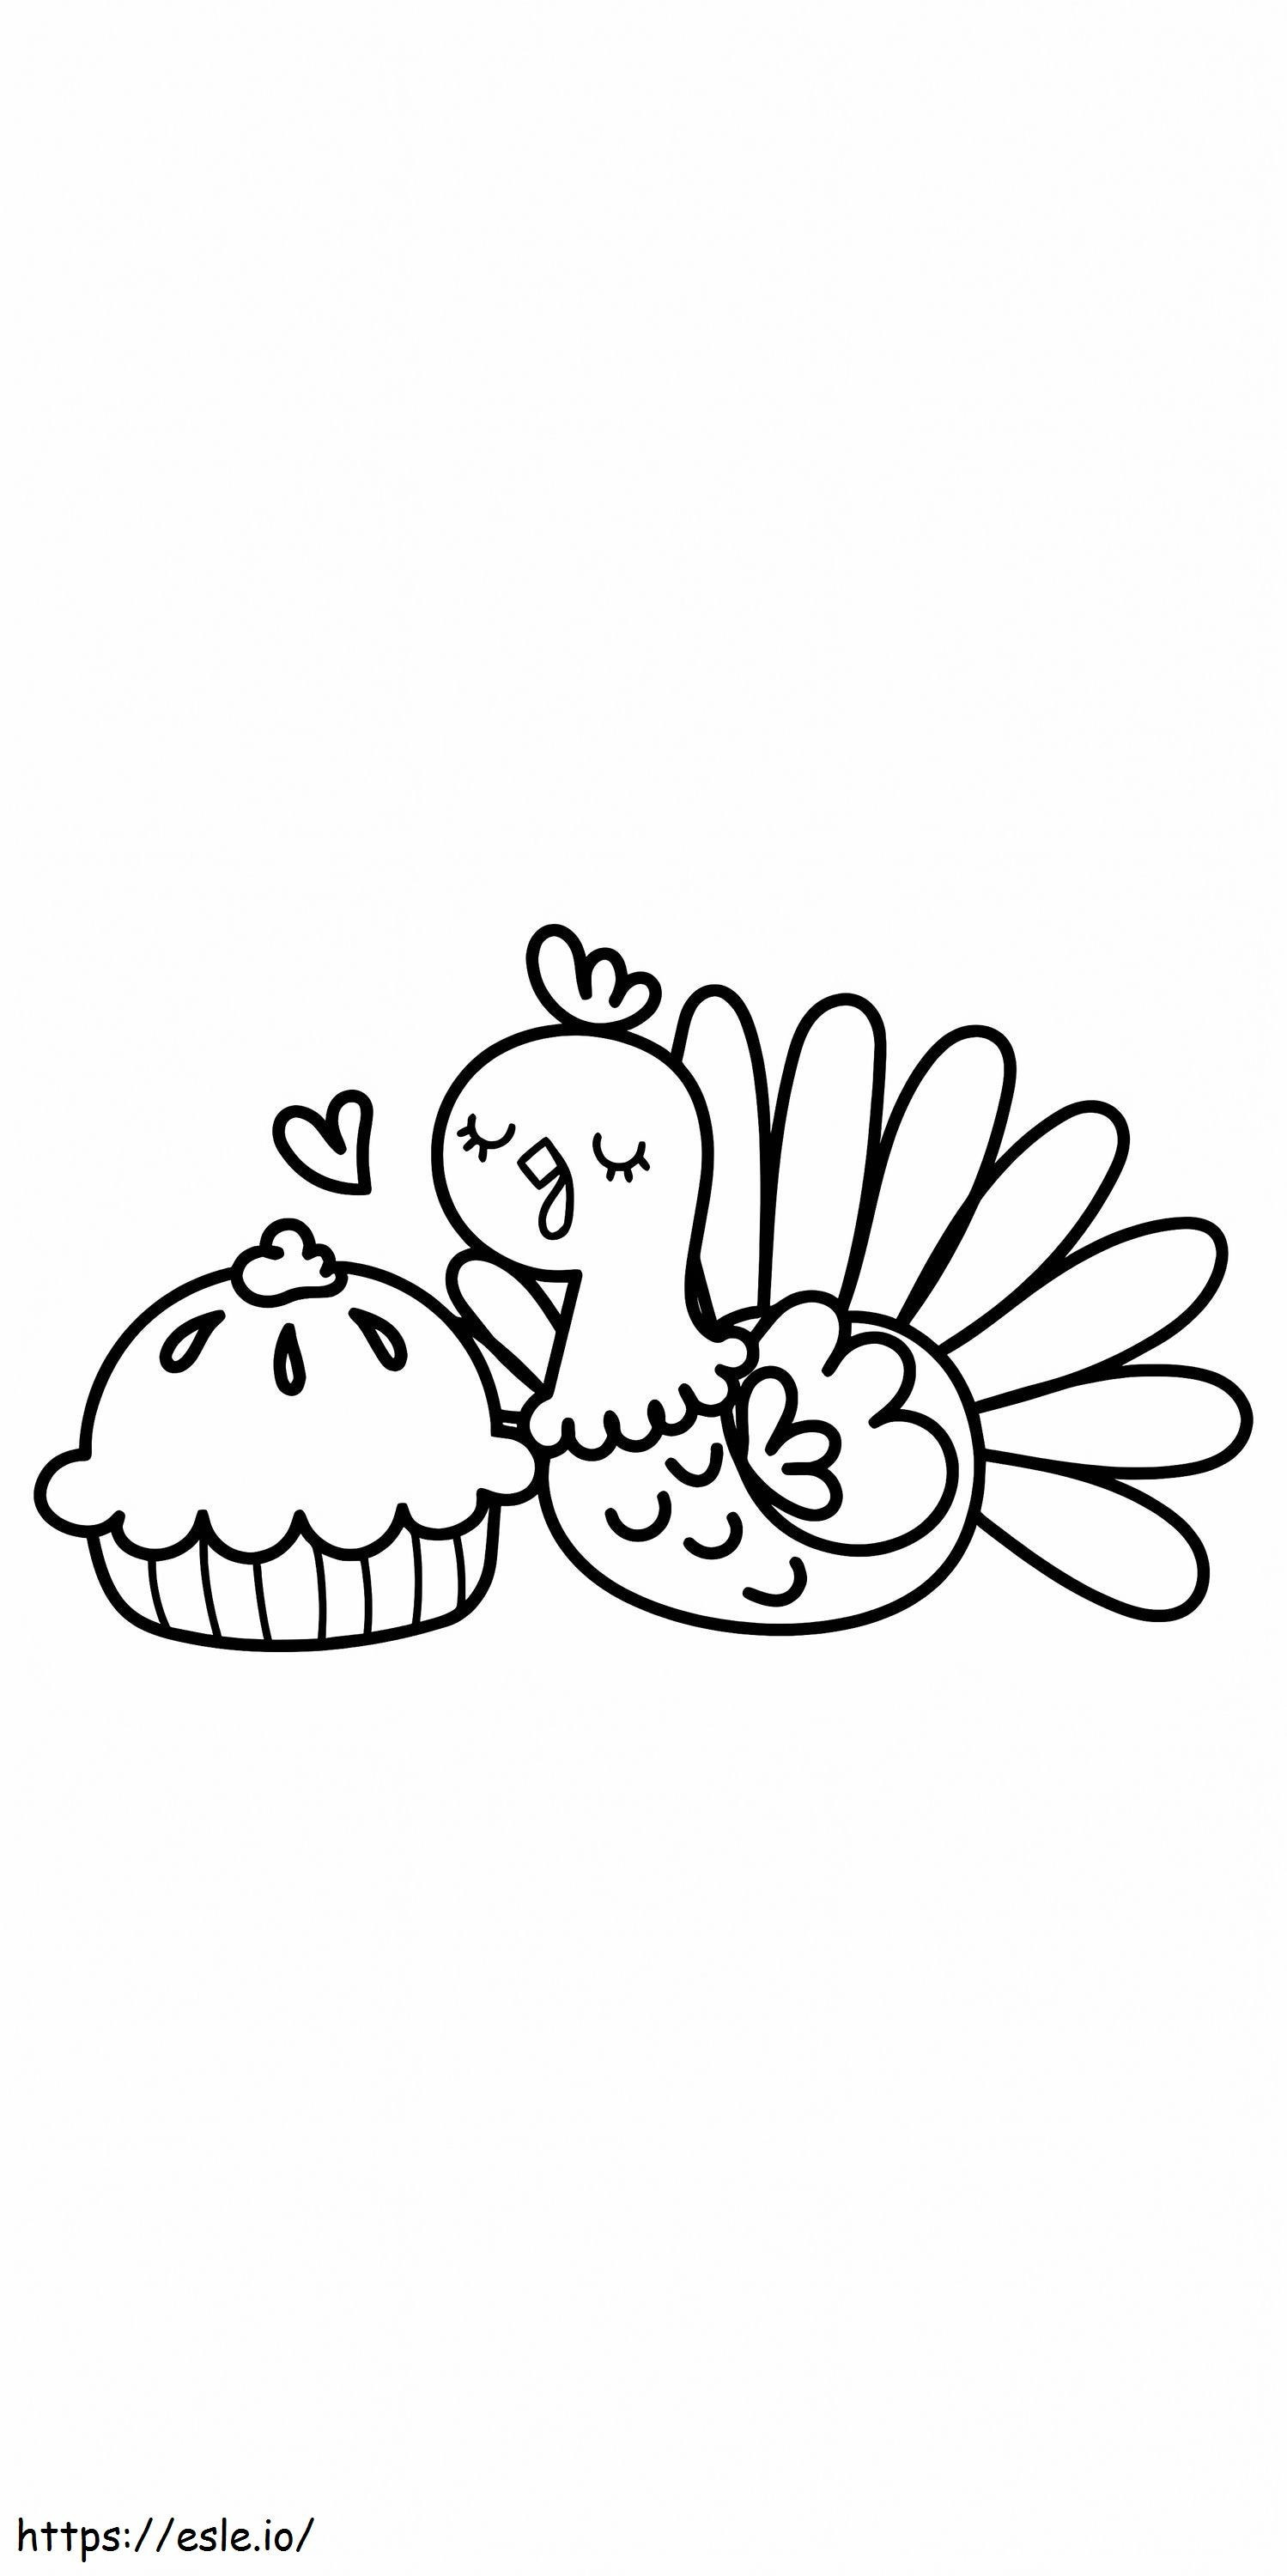 Cupcake e perus brancos para colorir